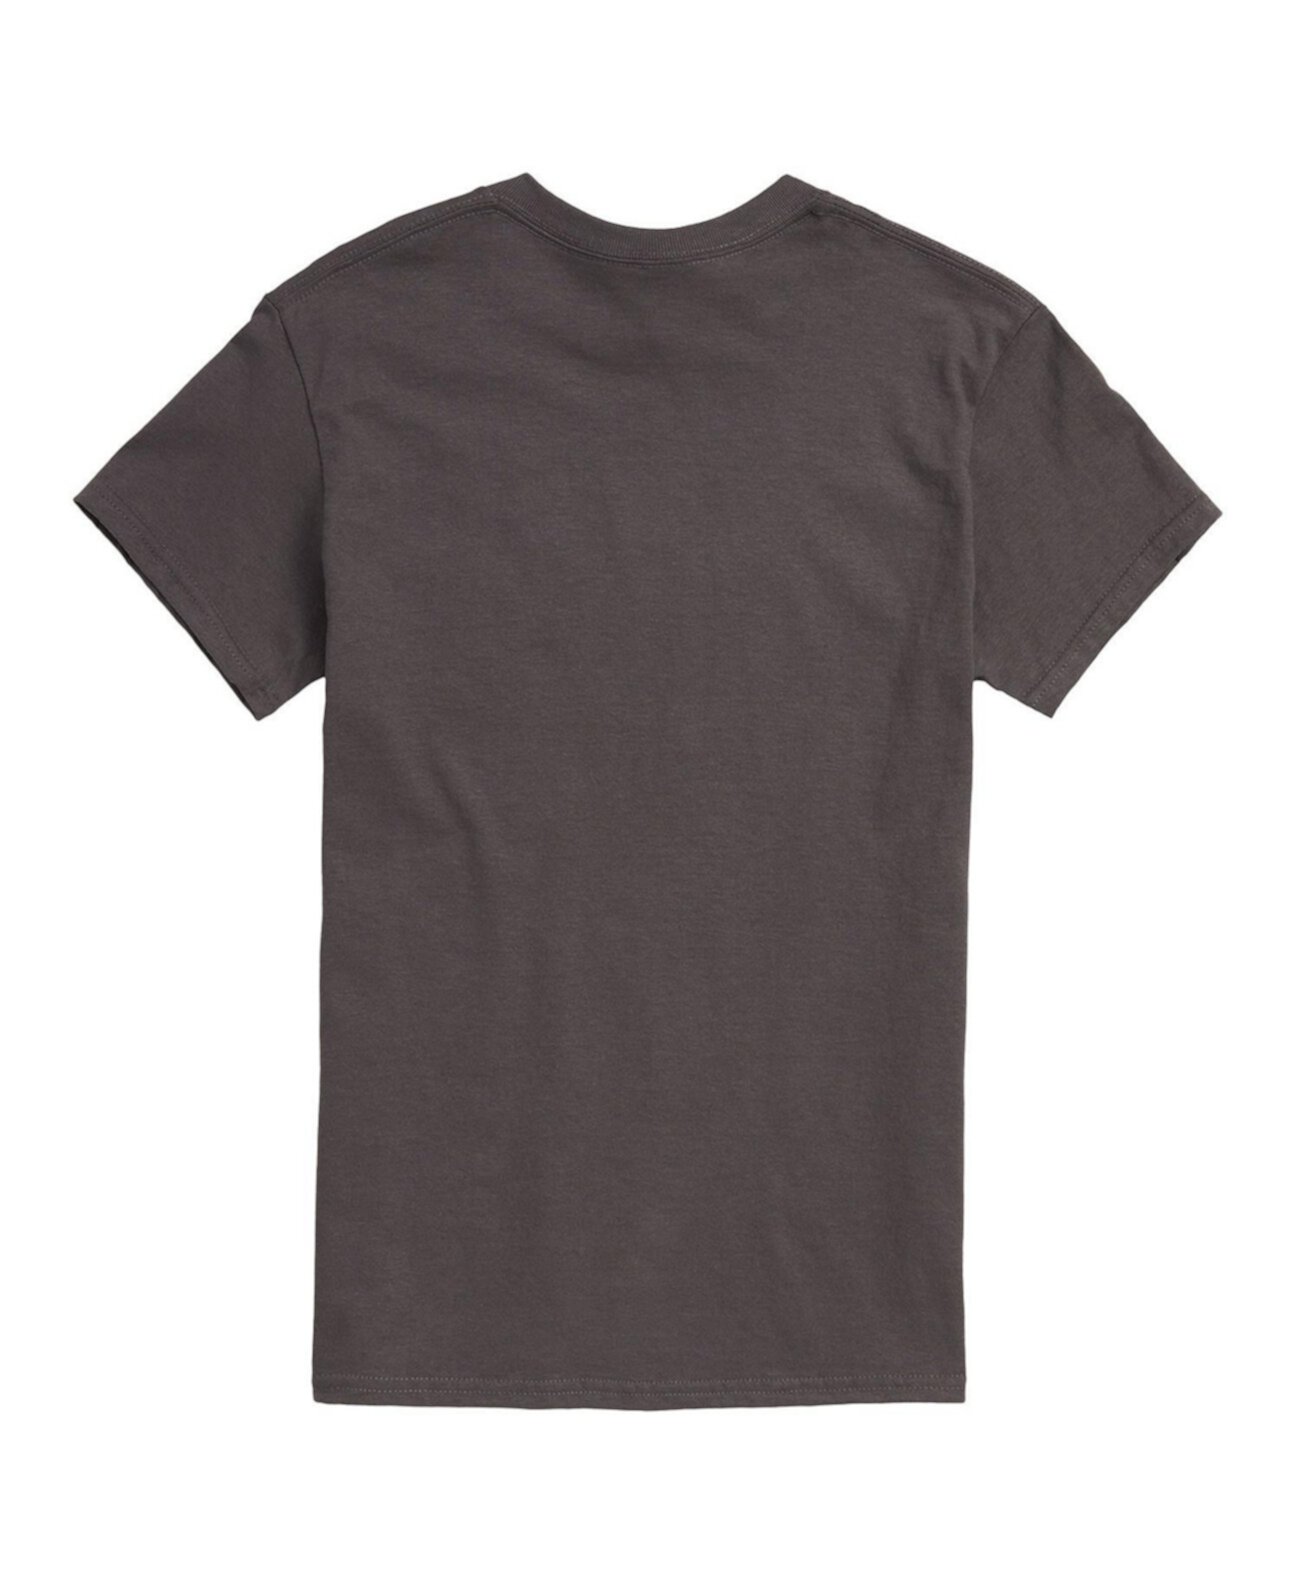 Мужские футболки с коротким рукавом арахисового цвета AIRWAVES